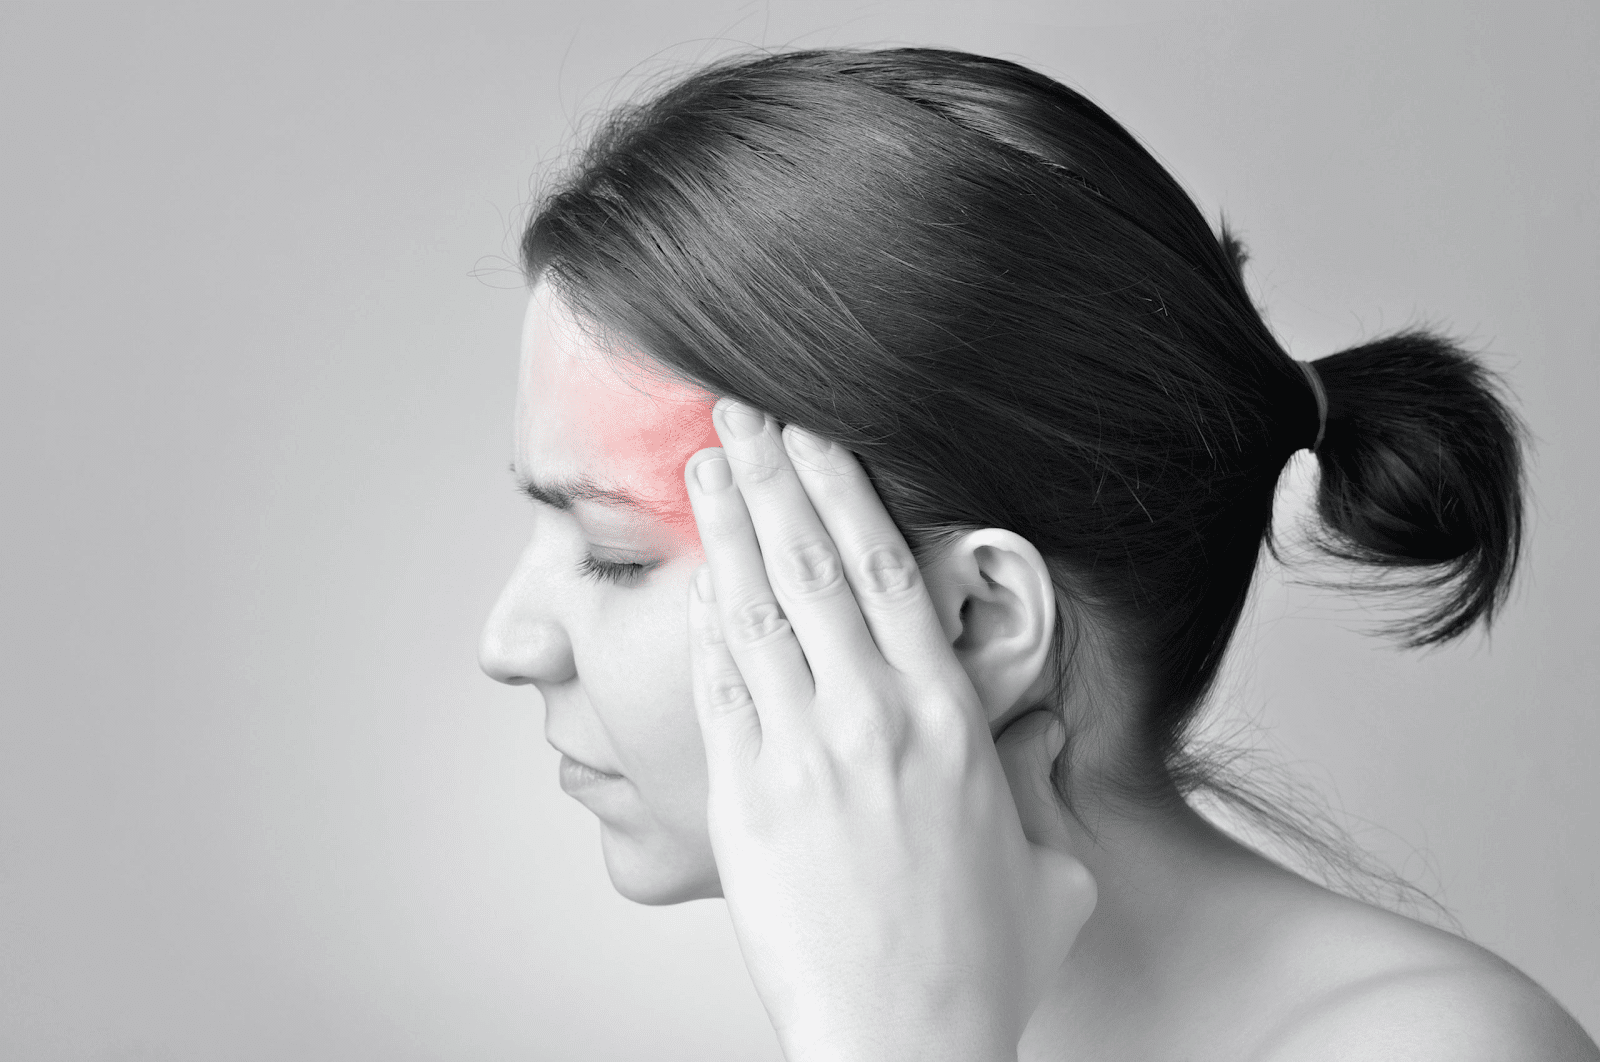 A black and white picture highlighting a woman's throbbing headache.